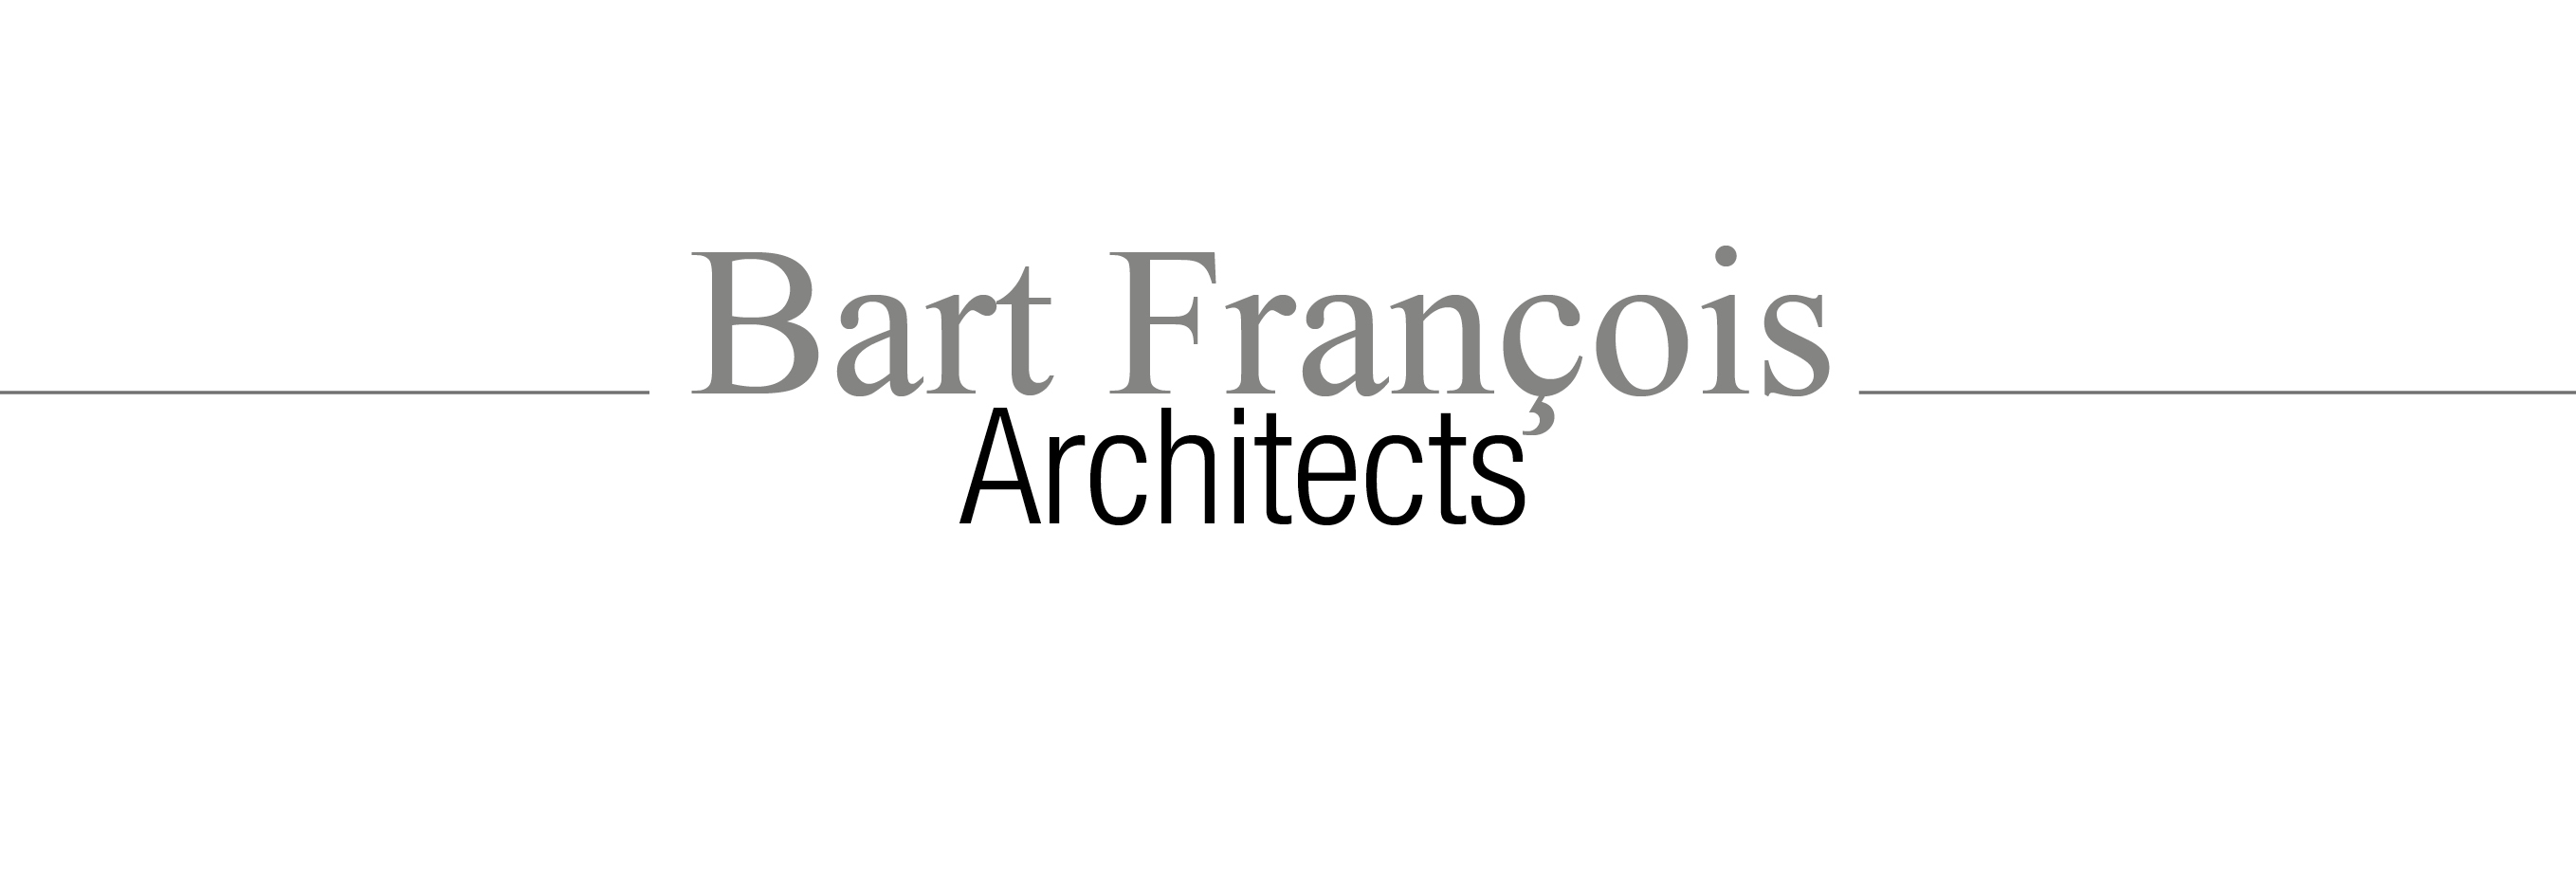 ARCHITECTENBUREAU  BART  FRANCOIS